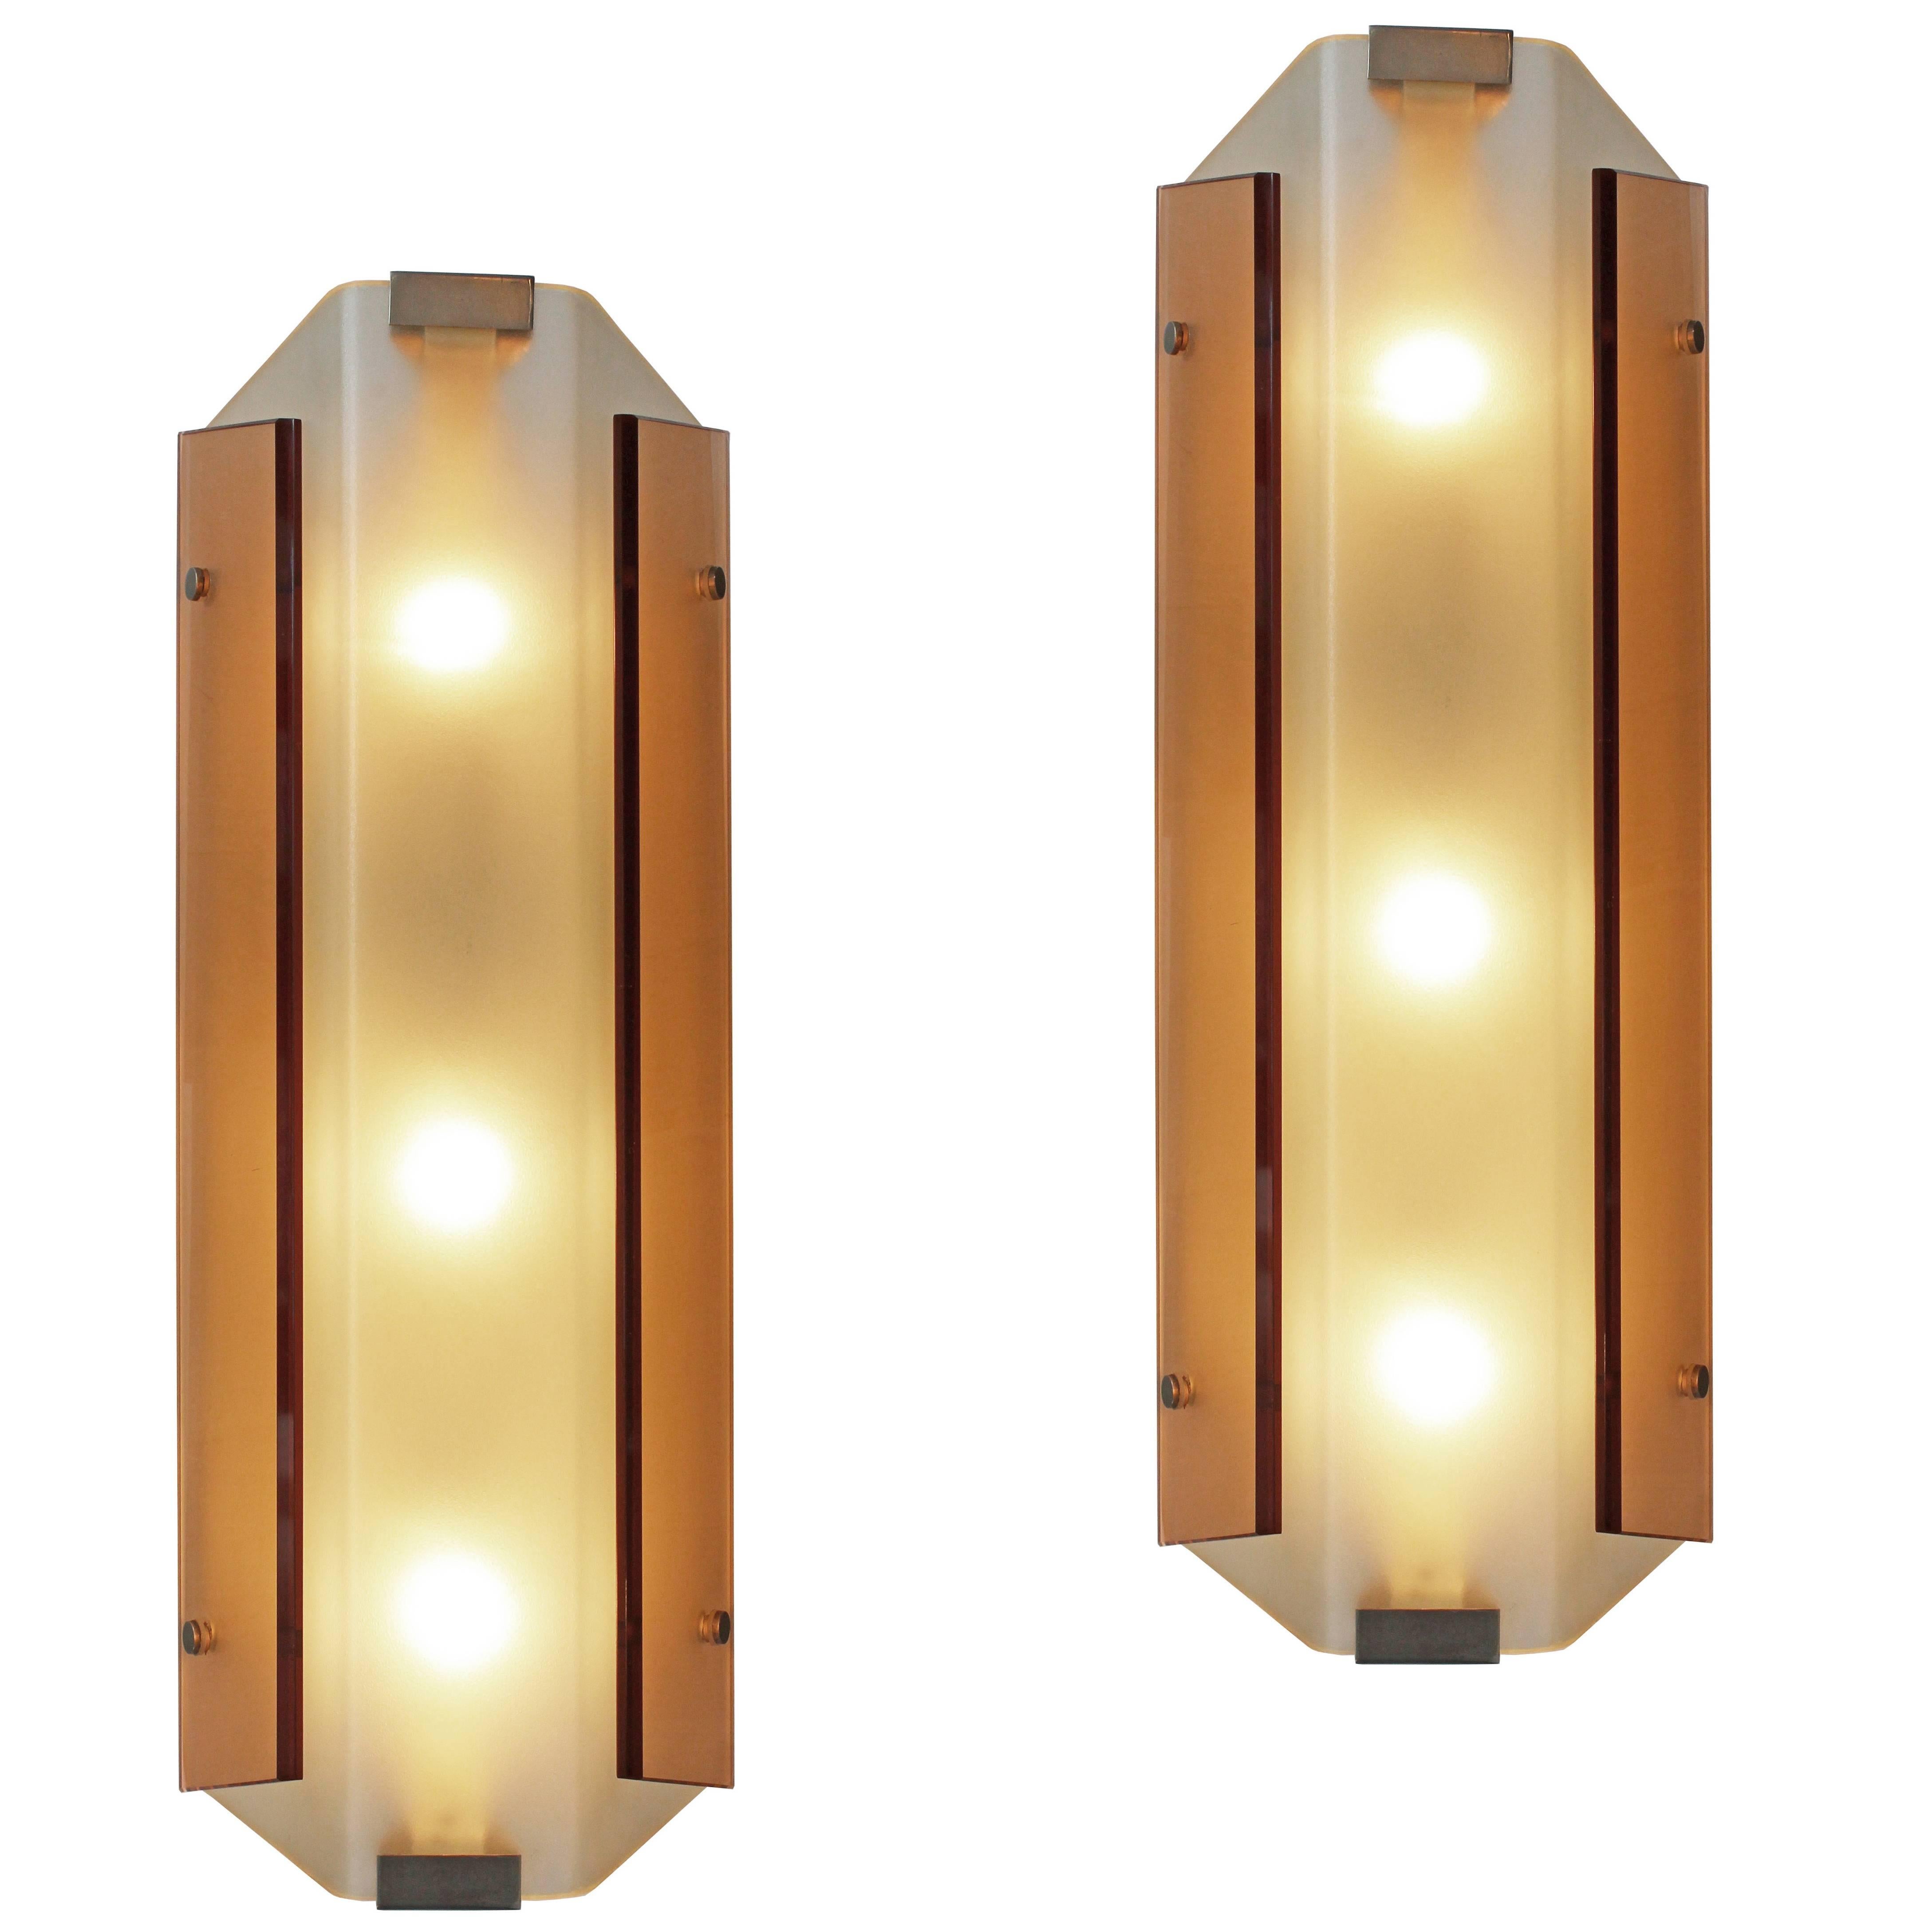 Rare pair of wall lights by Stilnovo